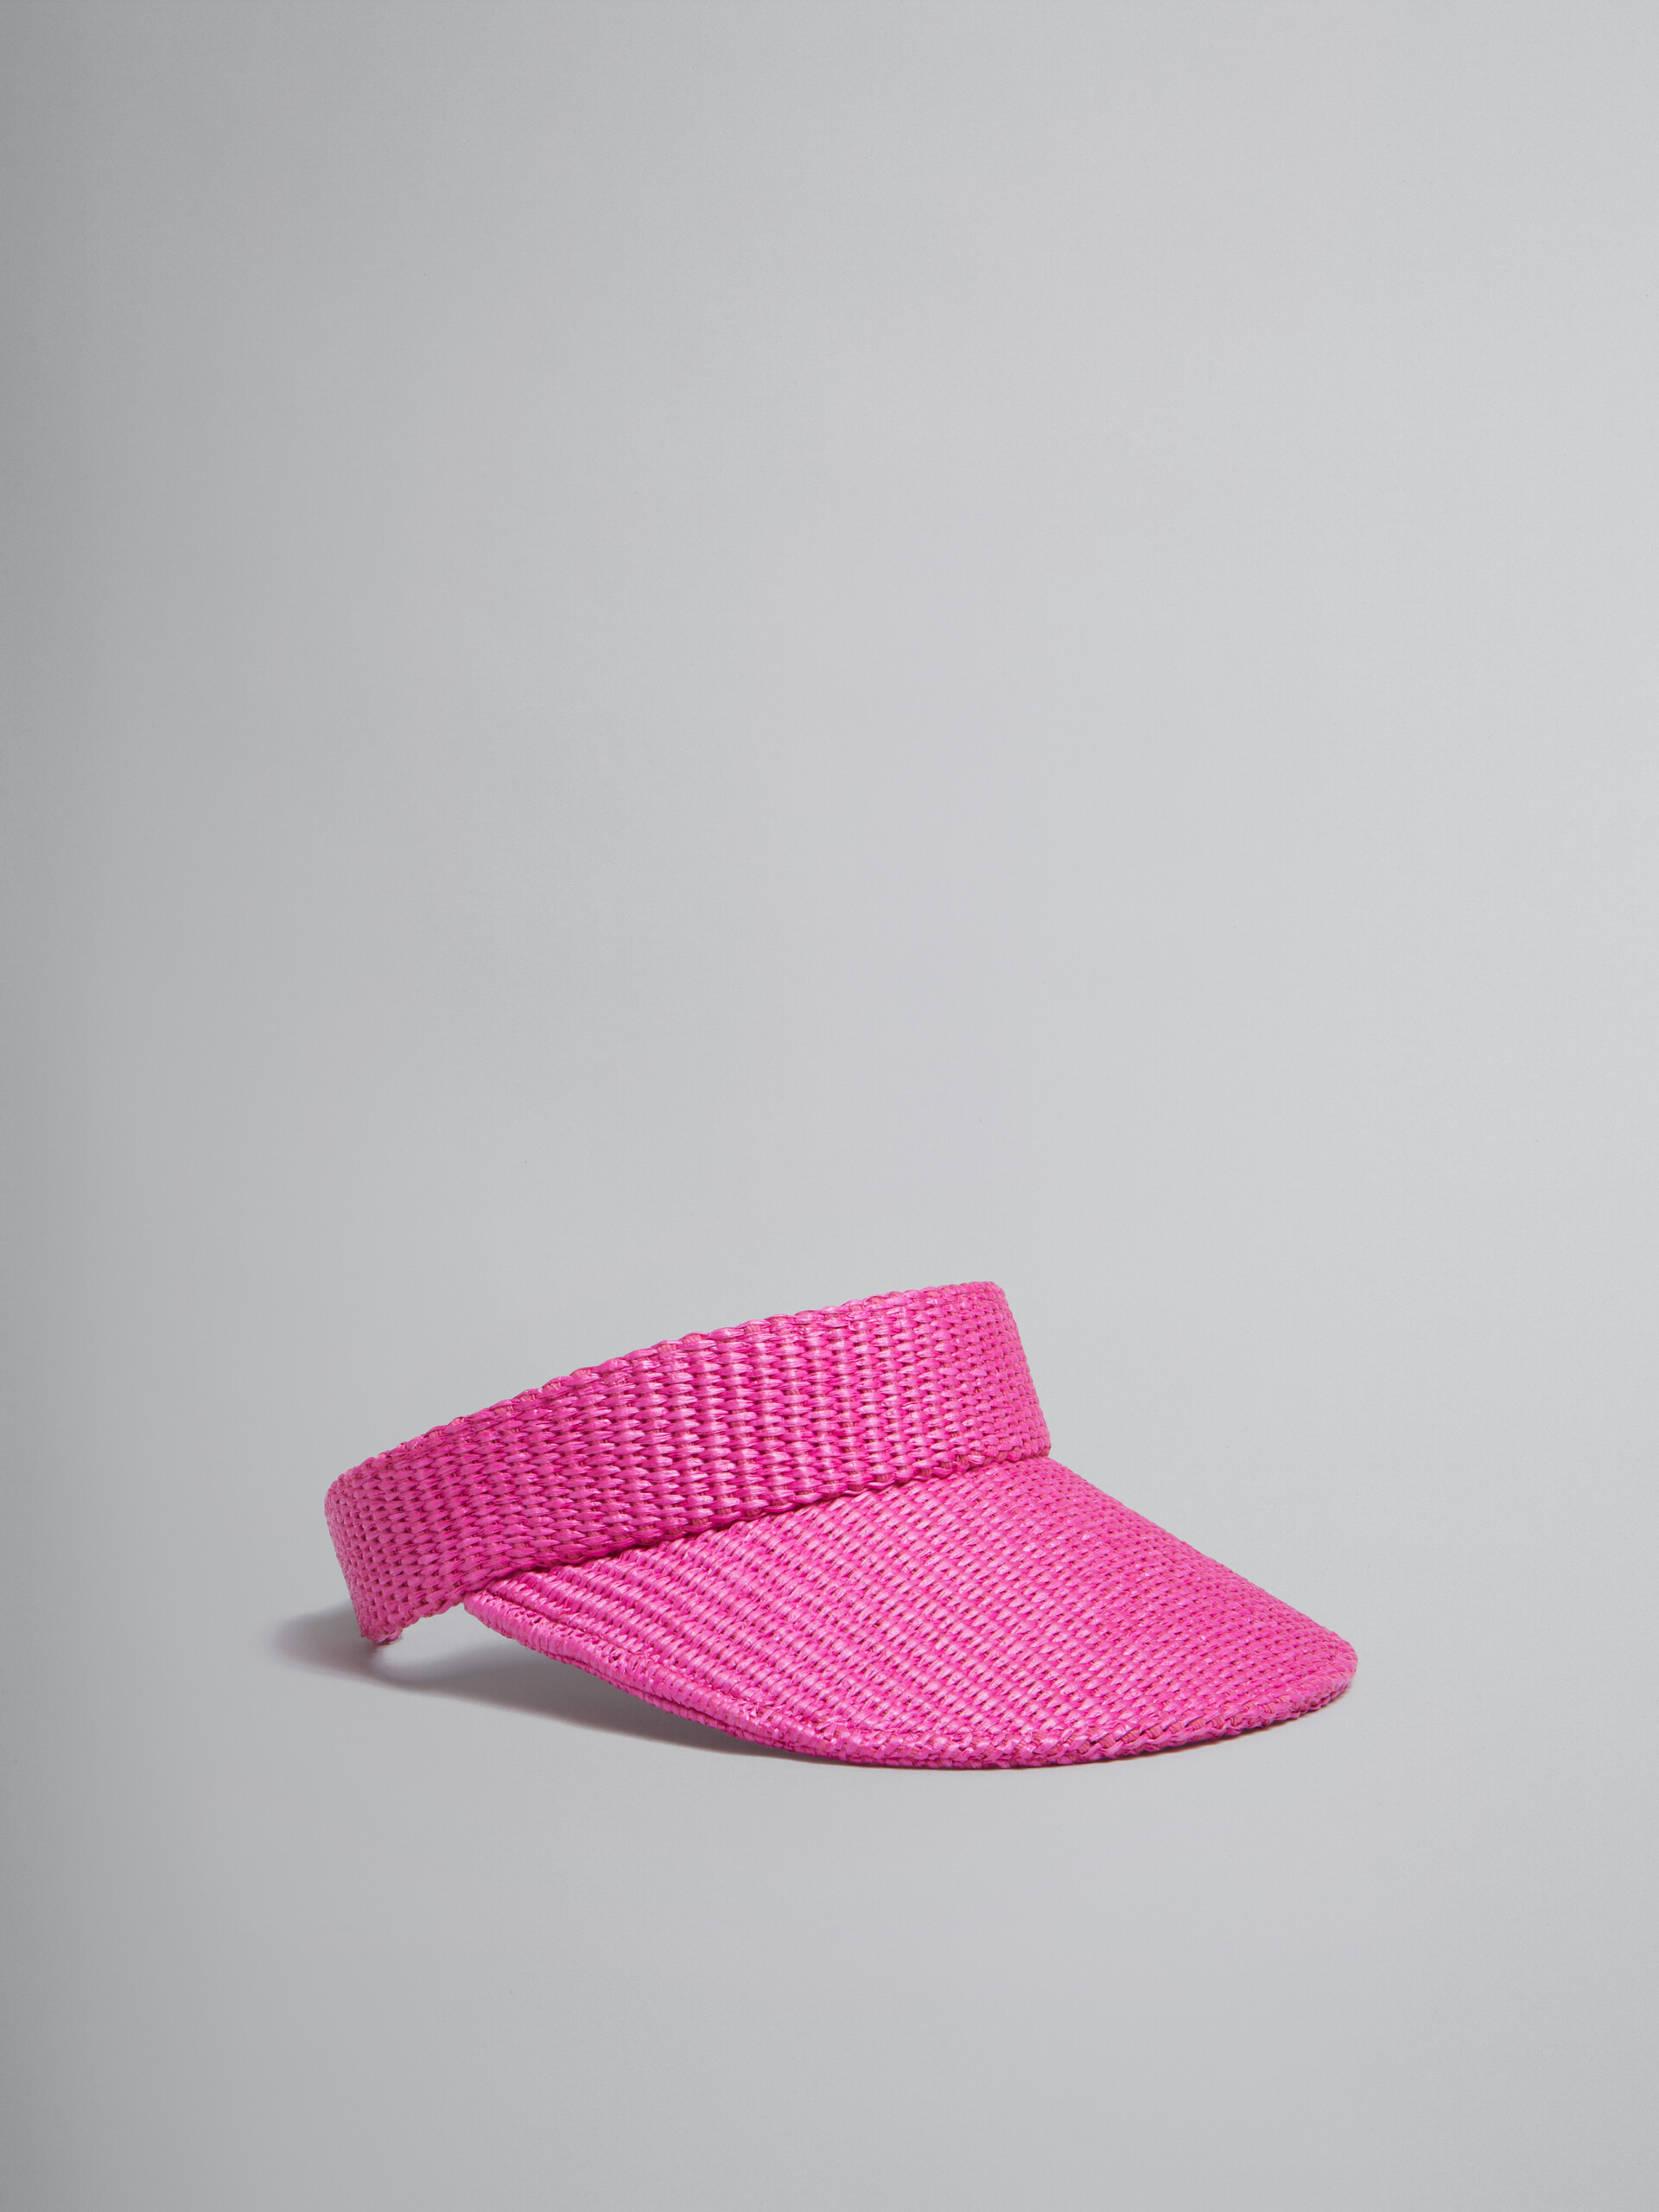 Marni x No Vacancy Inn - Fuchsia visor in raffia fabric - Hats - Image 1